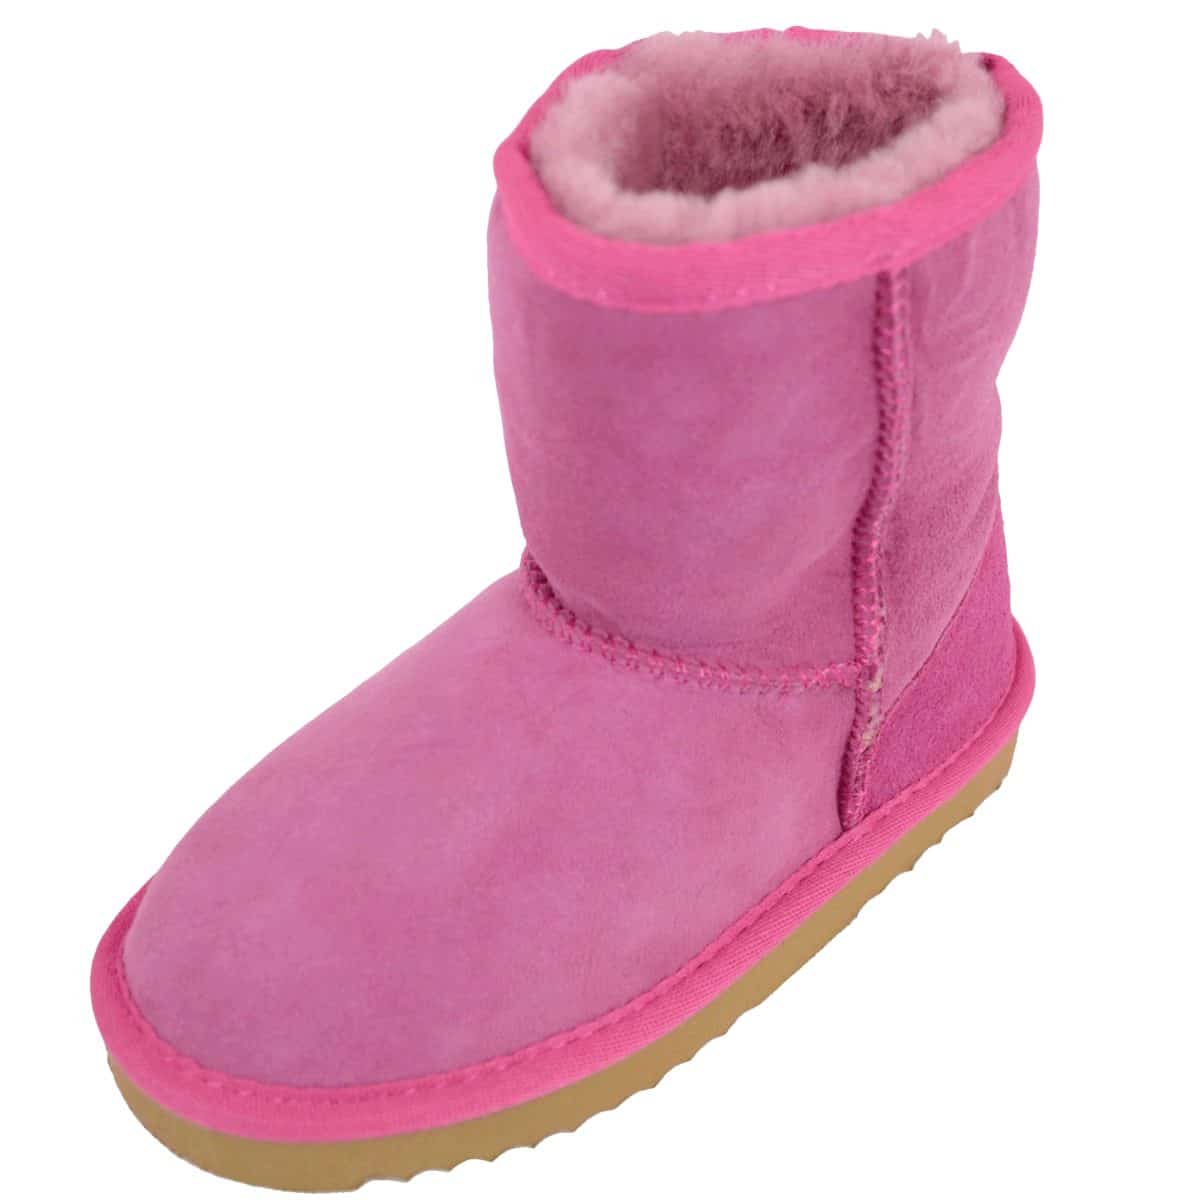 Snugrugs Kids Sheepskin Boot Pink